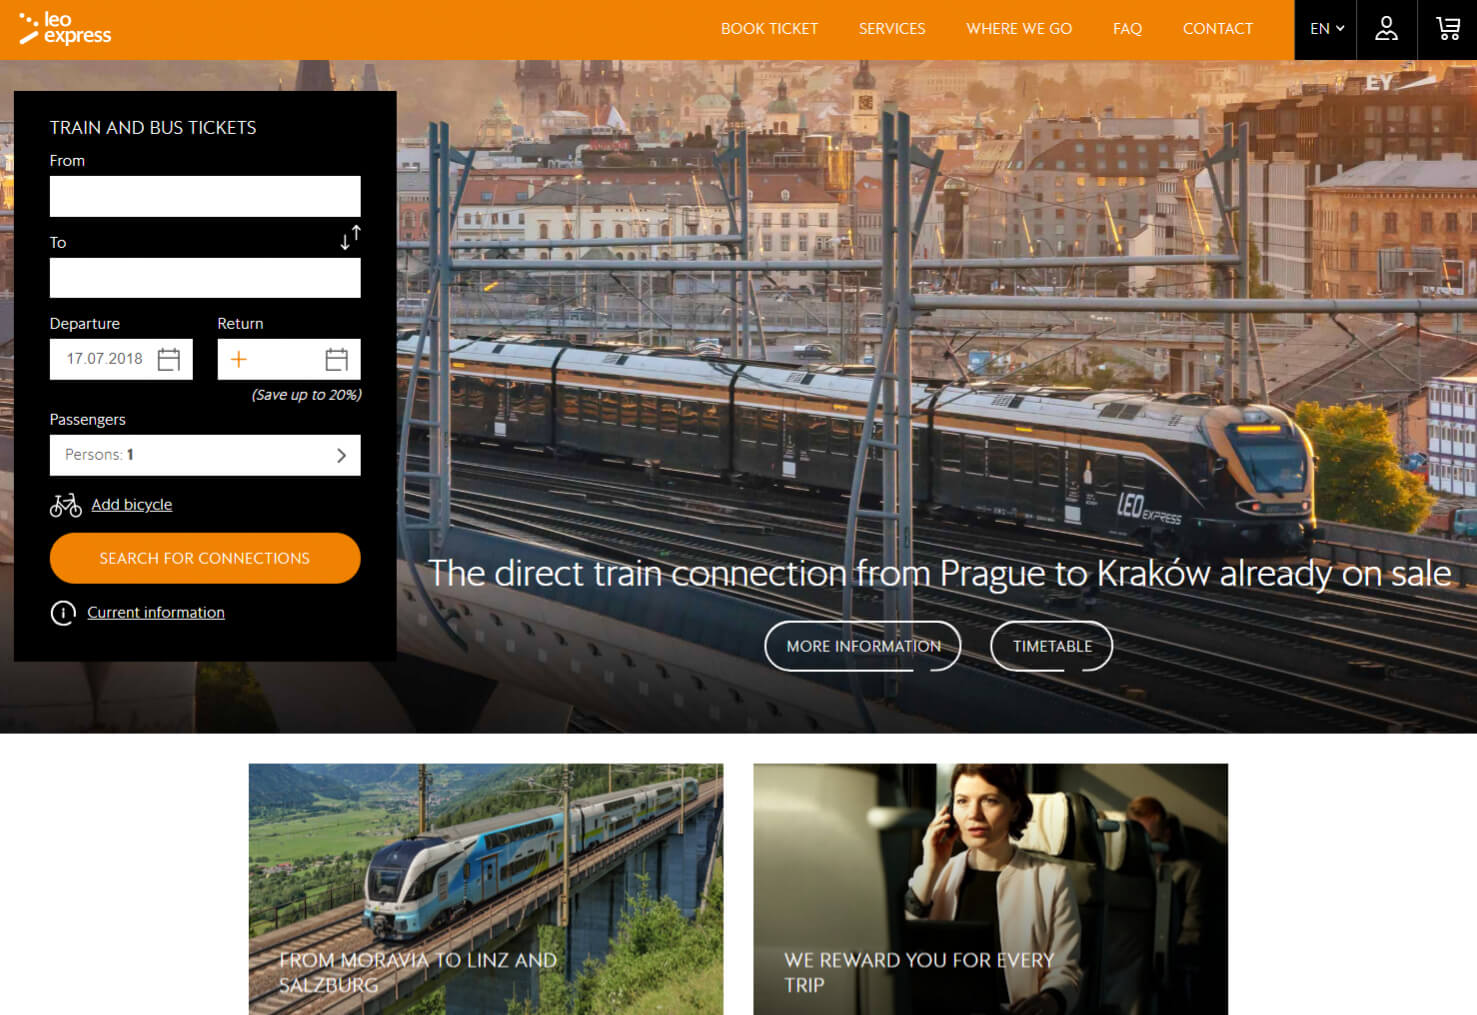 Leo Express homepage